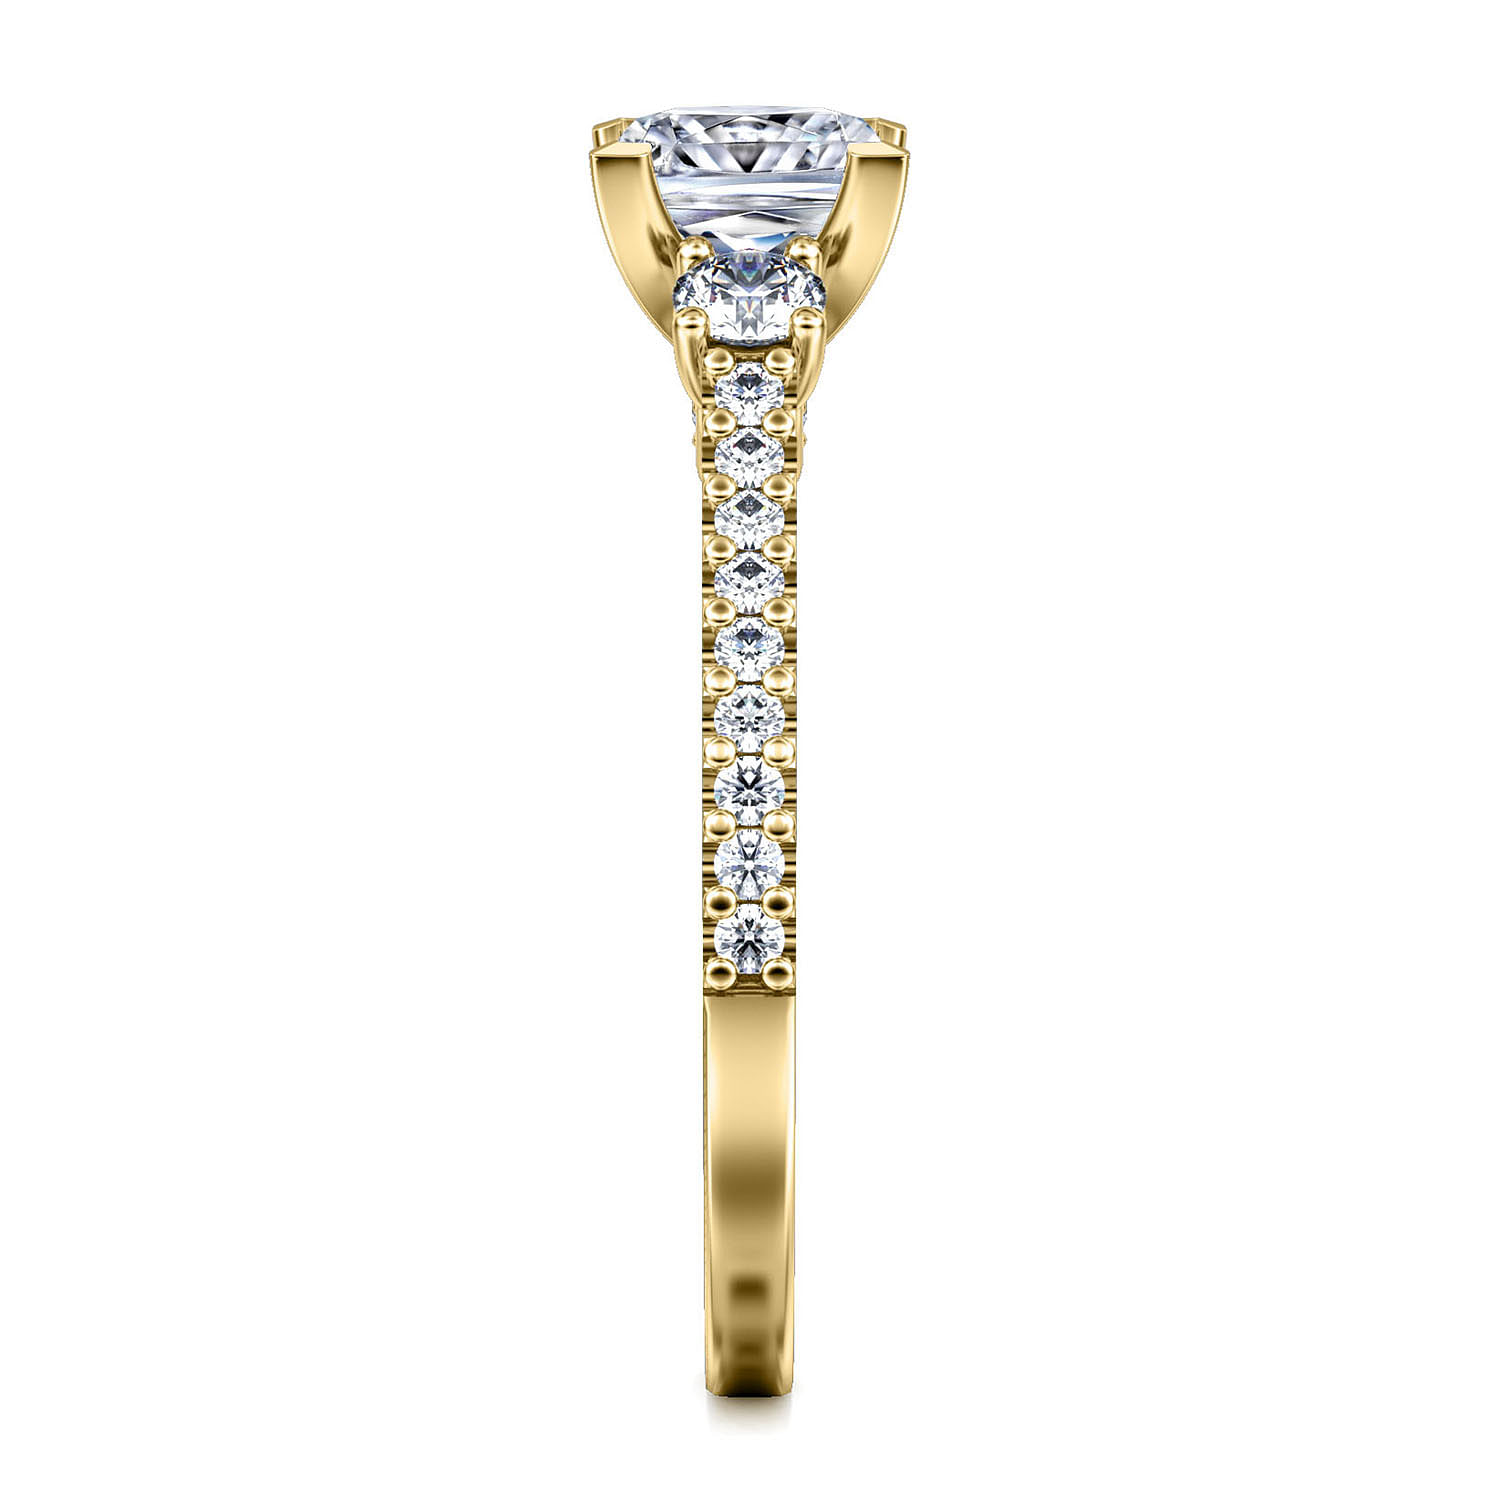 14K Yellow Gold Princess Cut Three Stone Diamond Engagement Ring